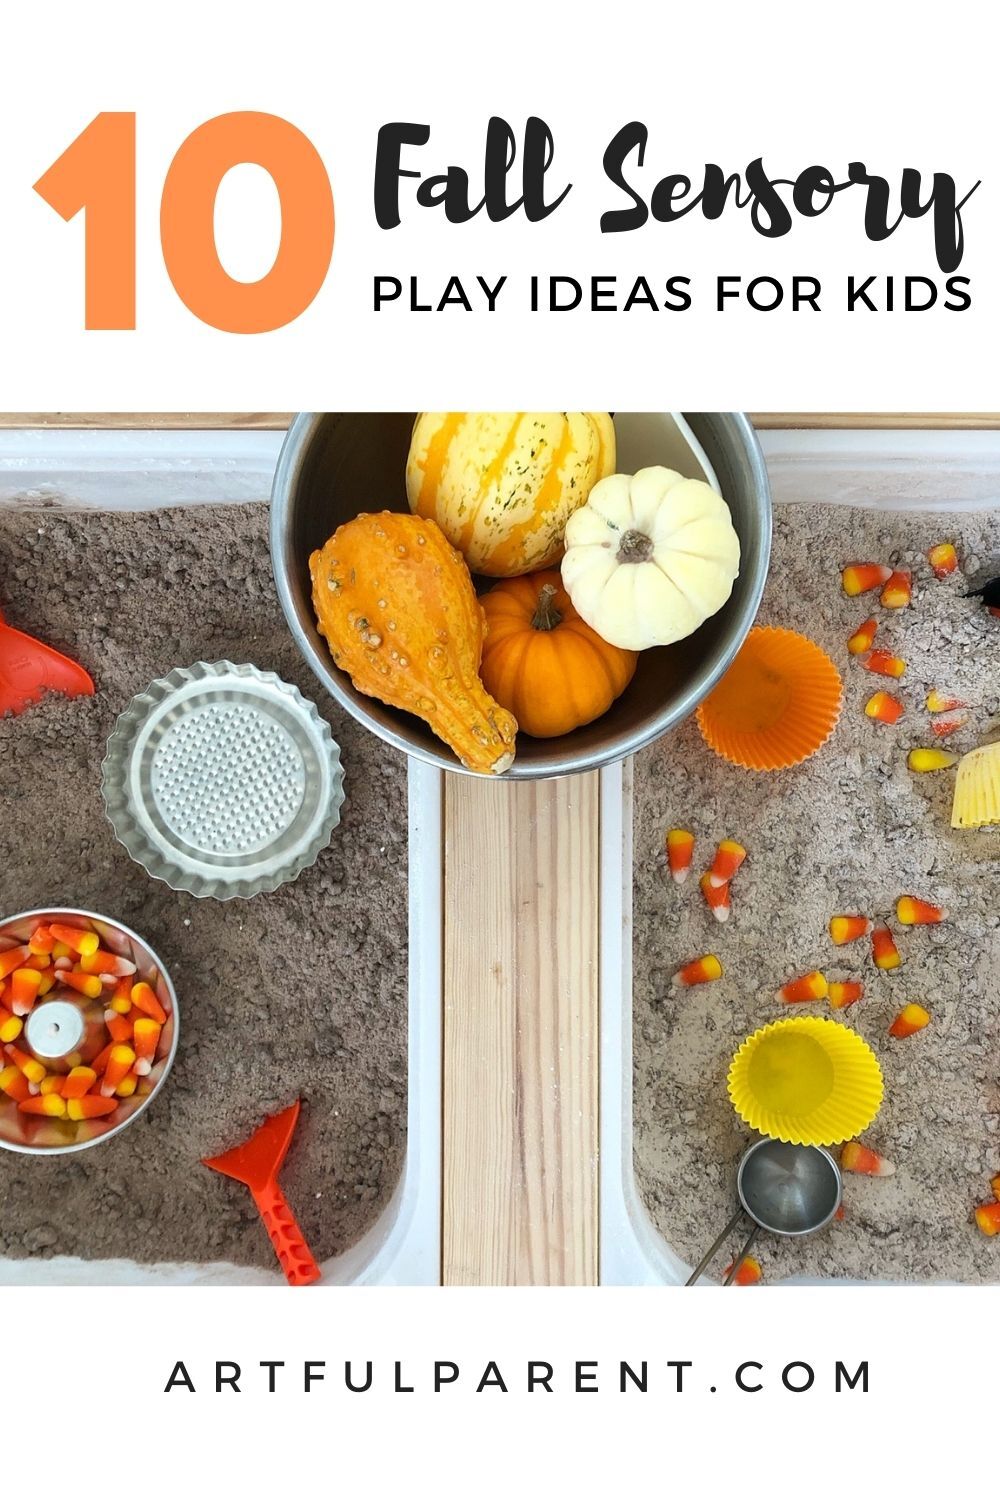 10 Fall Sensory Playa Ideas for Kids